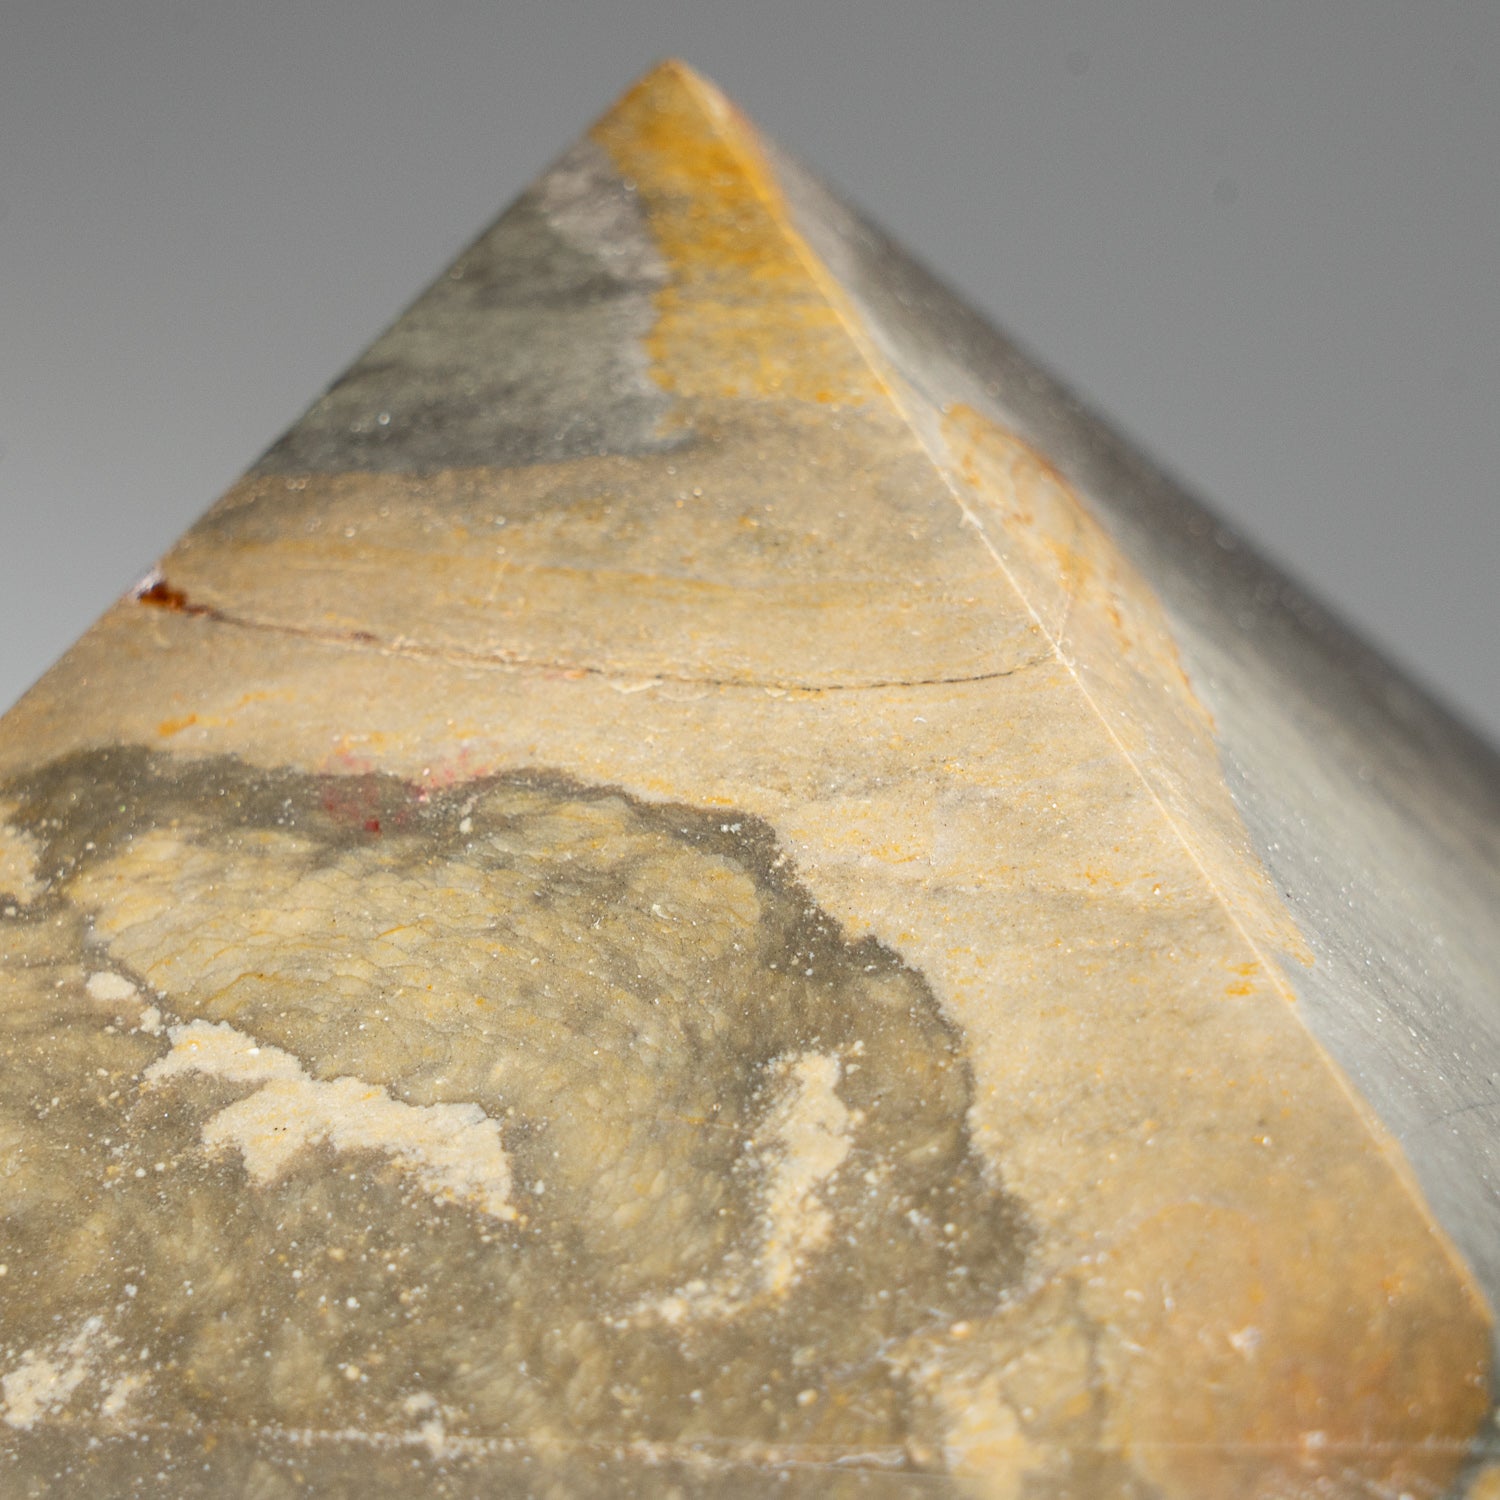 Polished Polychrome Pyramid from Madagascar (1.2 lbs)